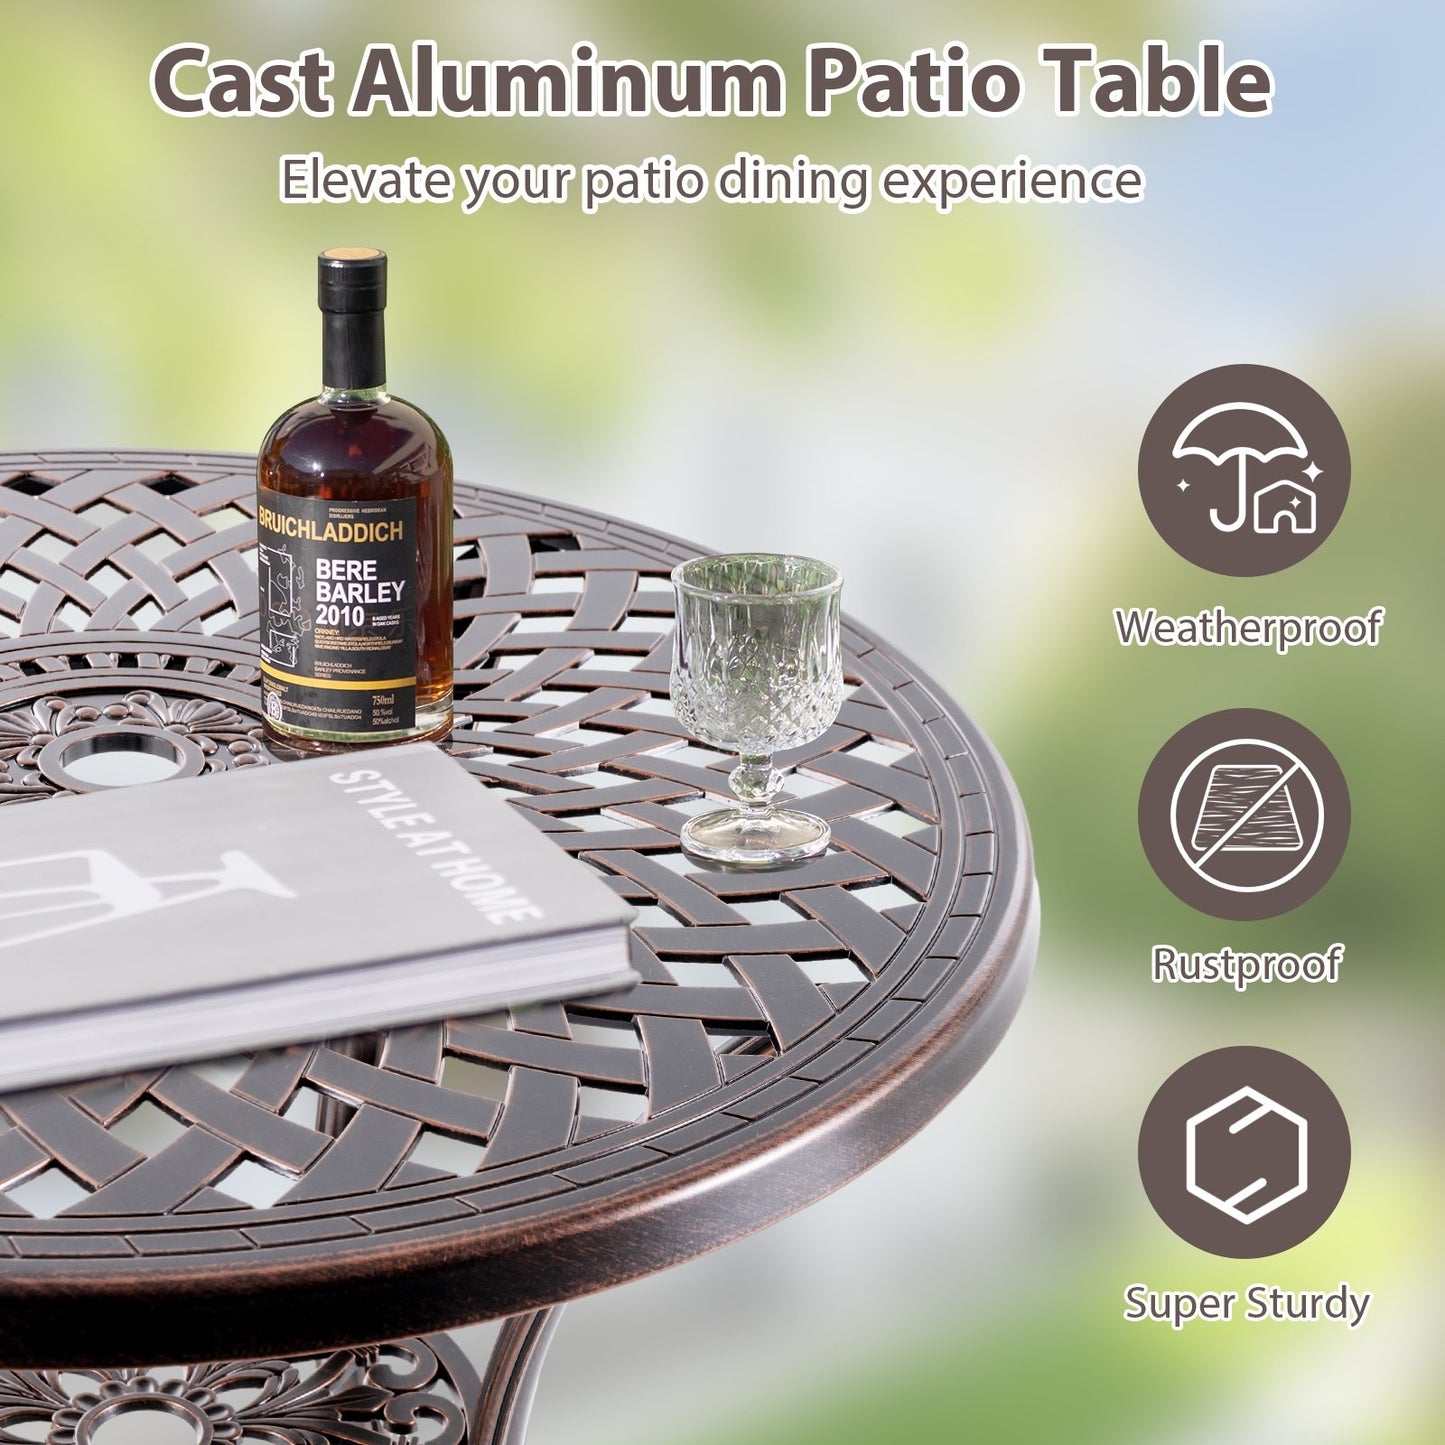 Patio Cast Aluminum Table 31 Inch Diameter Round Table with Umbrella Hole, Copper